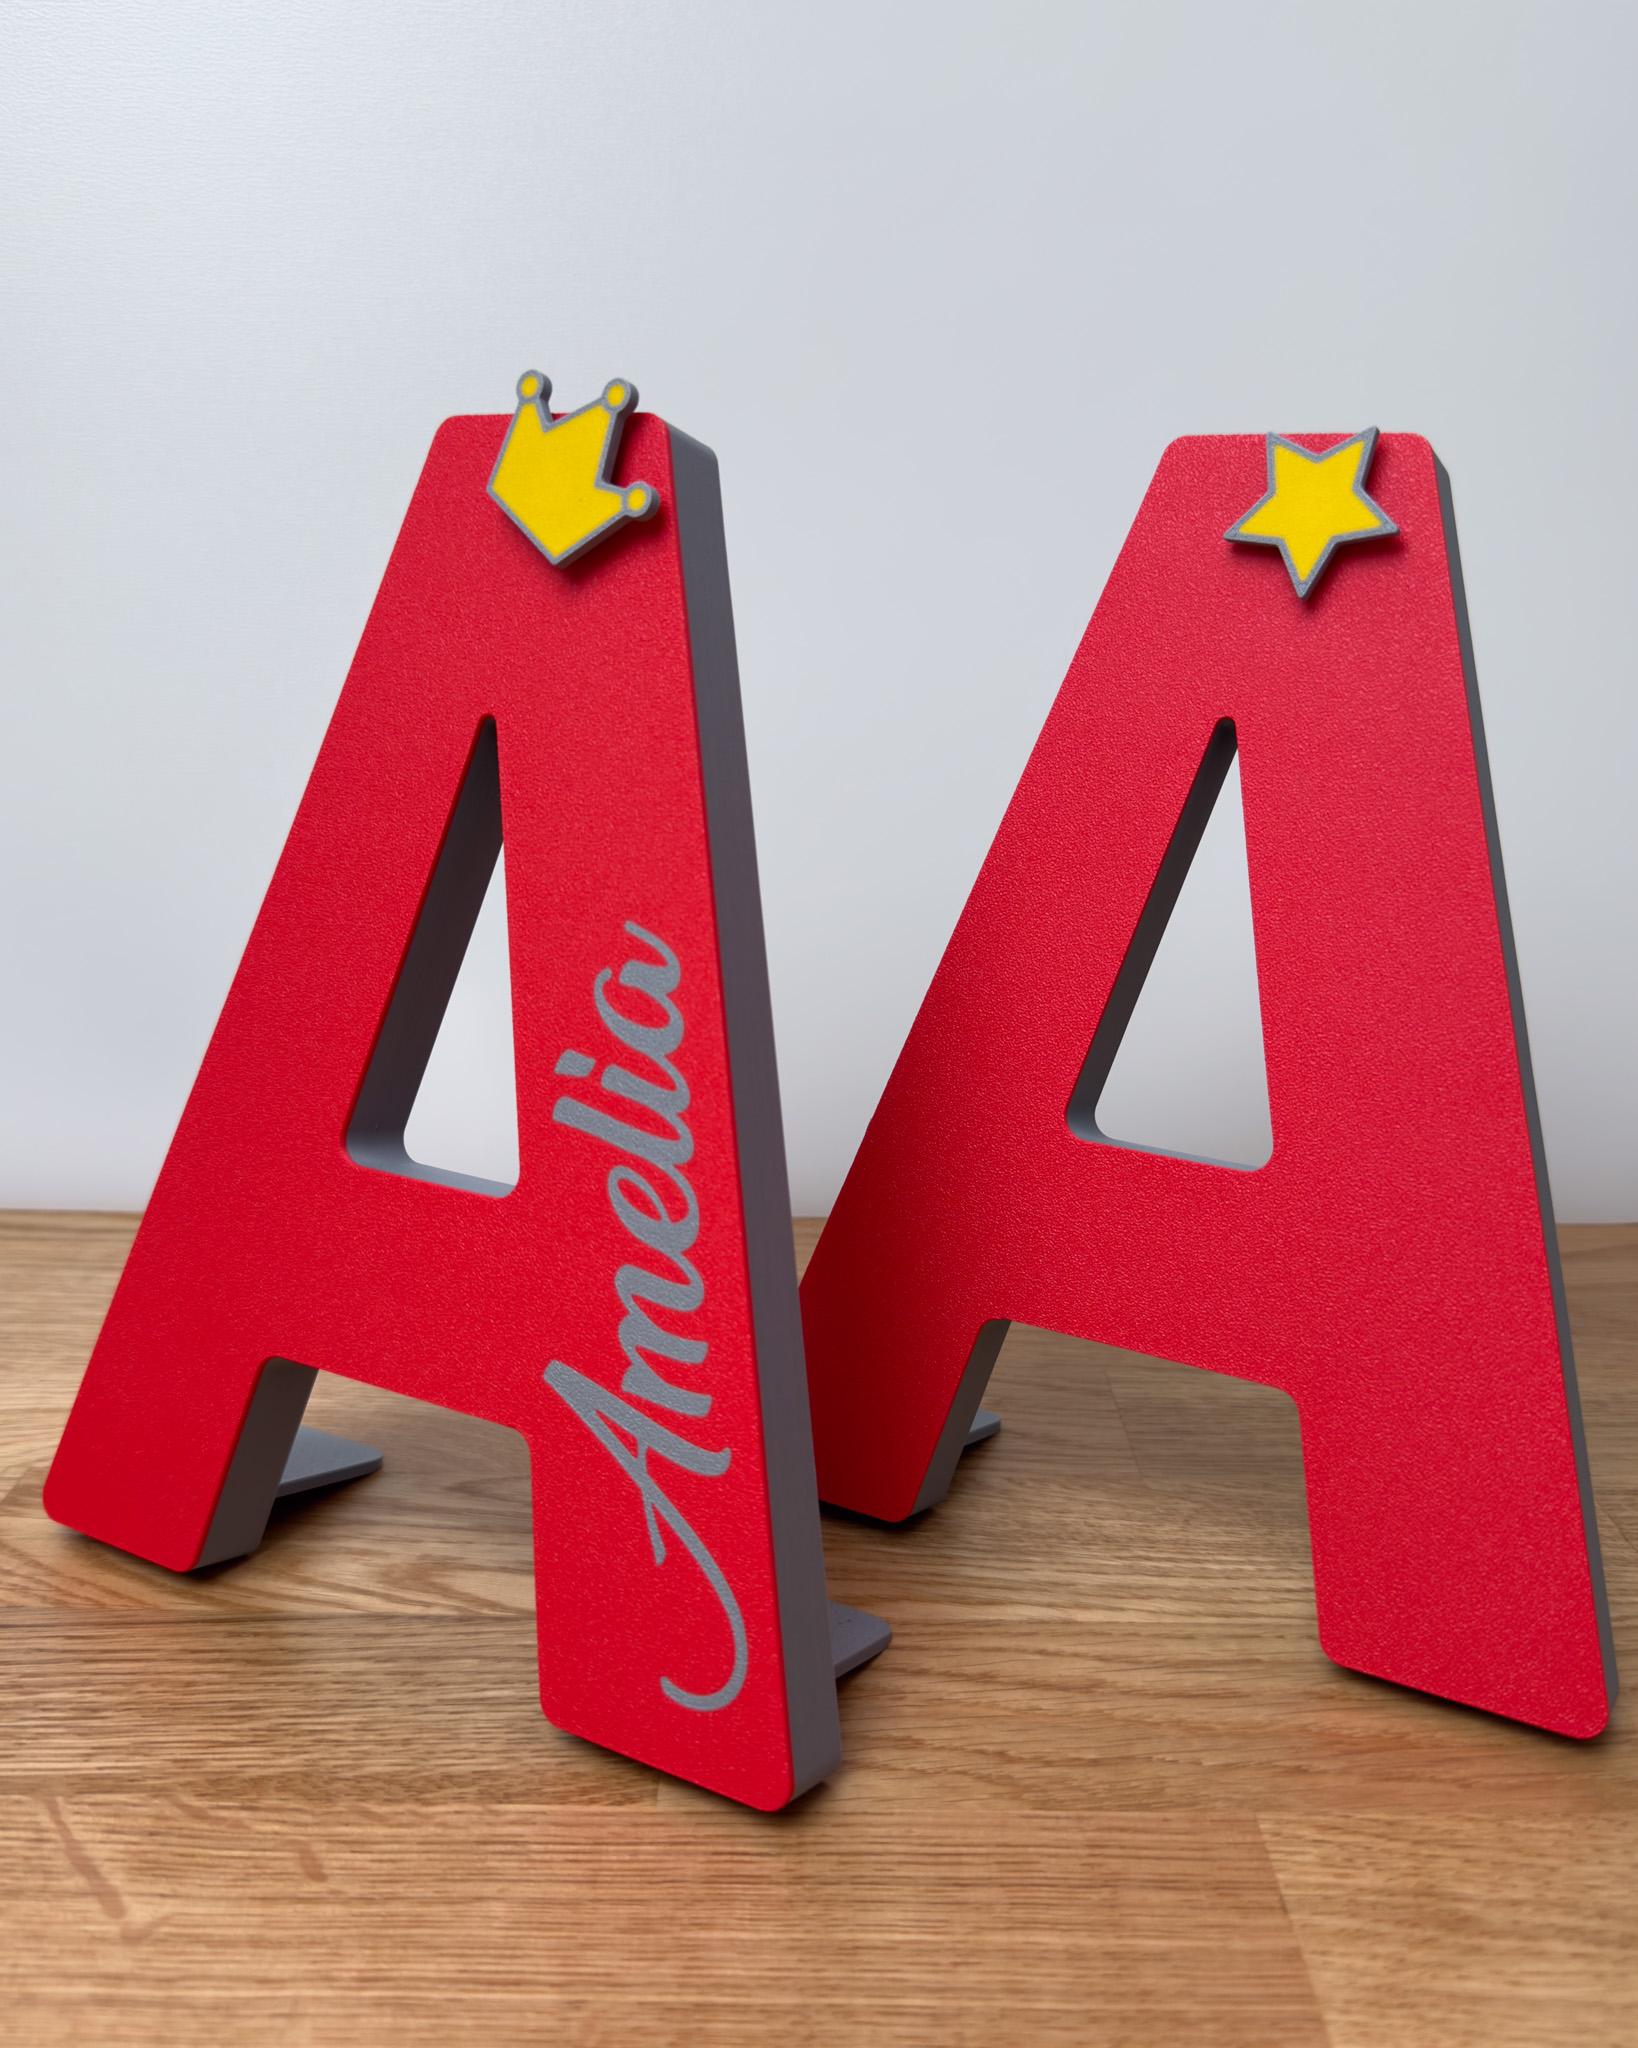 3D Letter A - by TeeTi3D 3d model